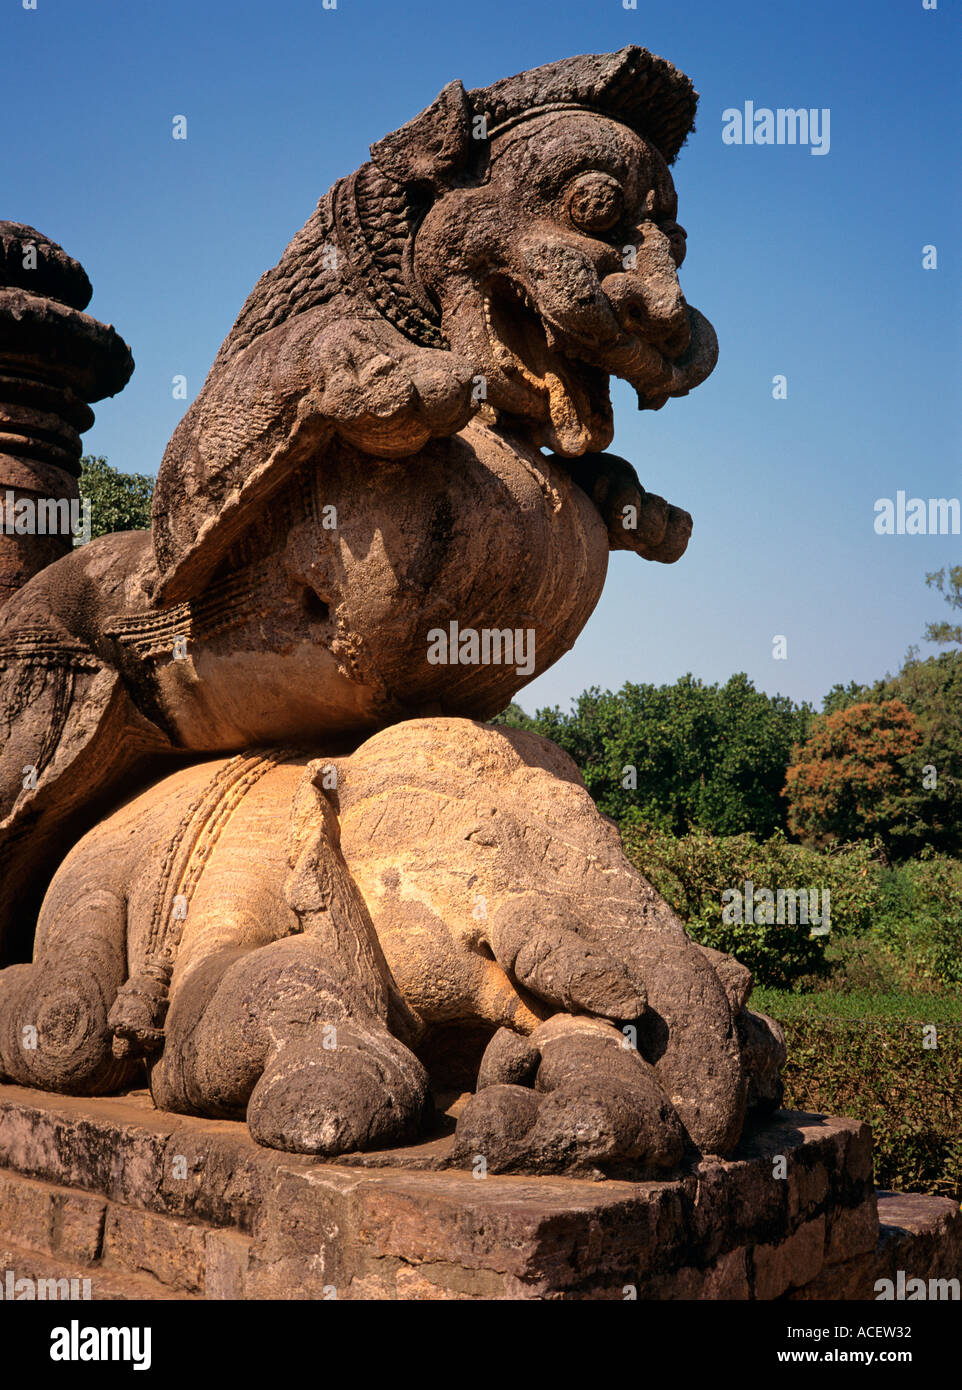 India Orissa Konark Sun Temple Gajasingha Lion crushing elephant sculpture Stock Photo